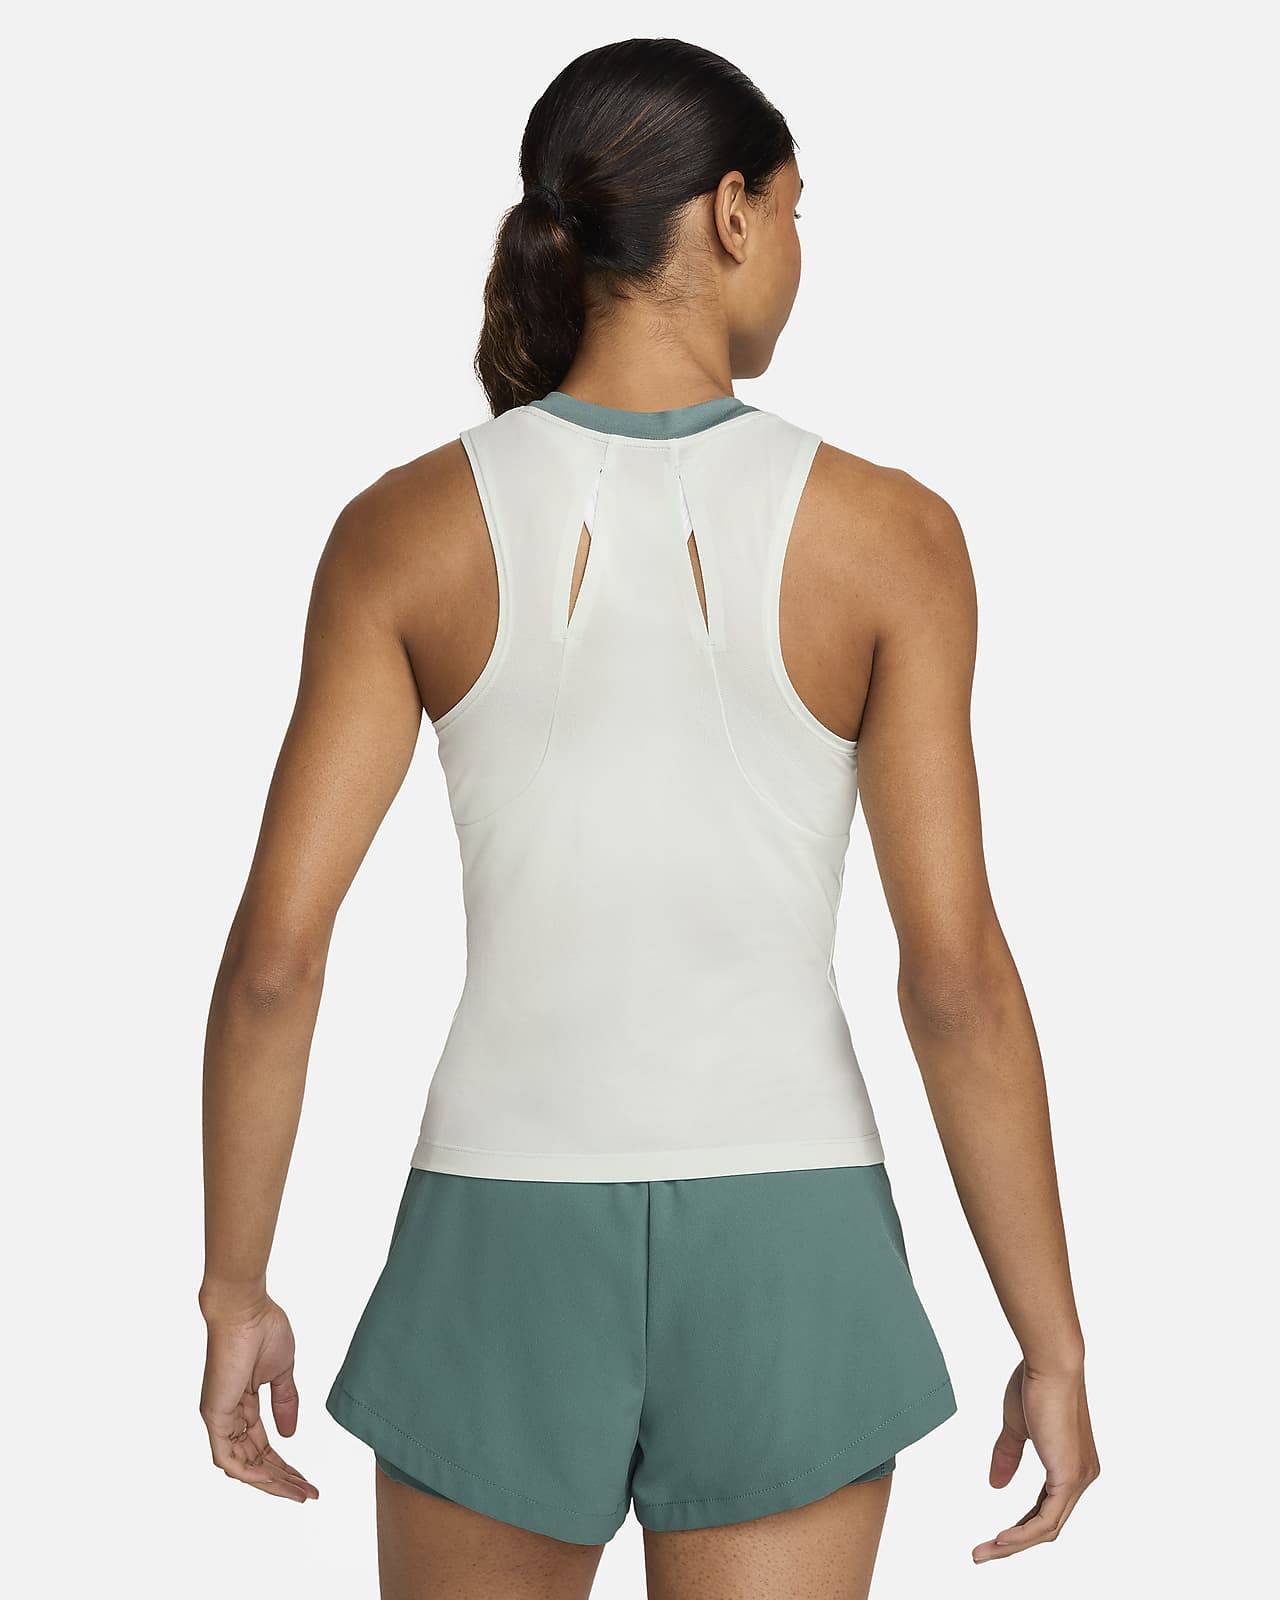 Nike Gray White Athletic Tank Top Mesh Sides Back Drawstring Woman's S -  beyond exchange